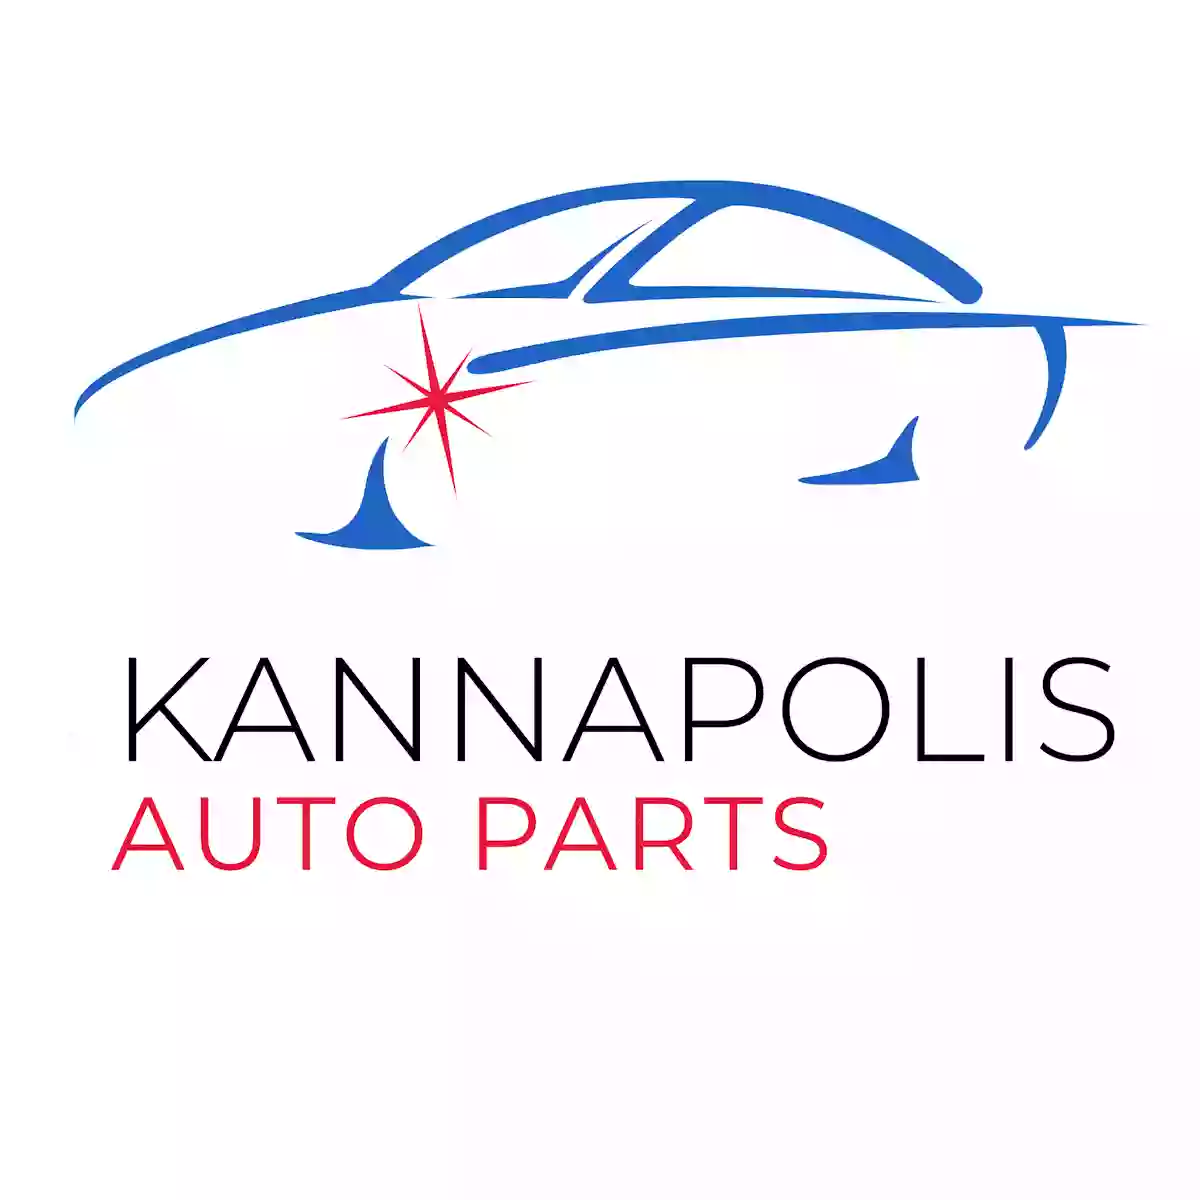 Kannapolis Auto Parts